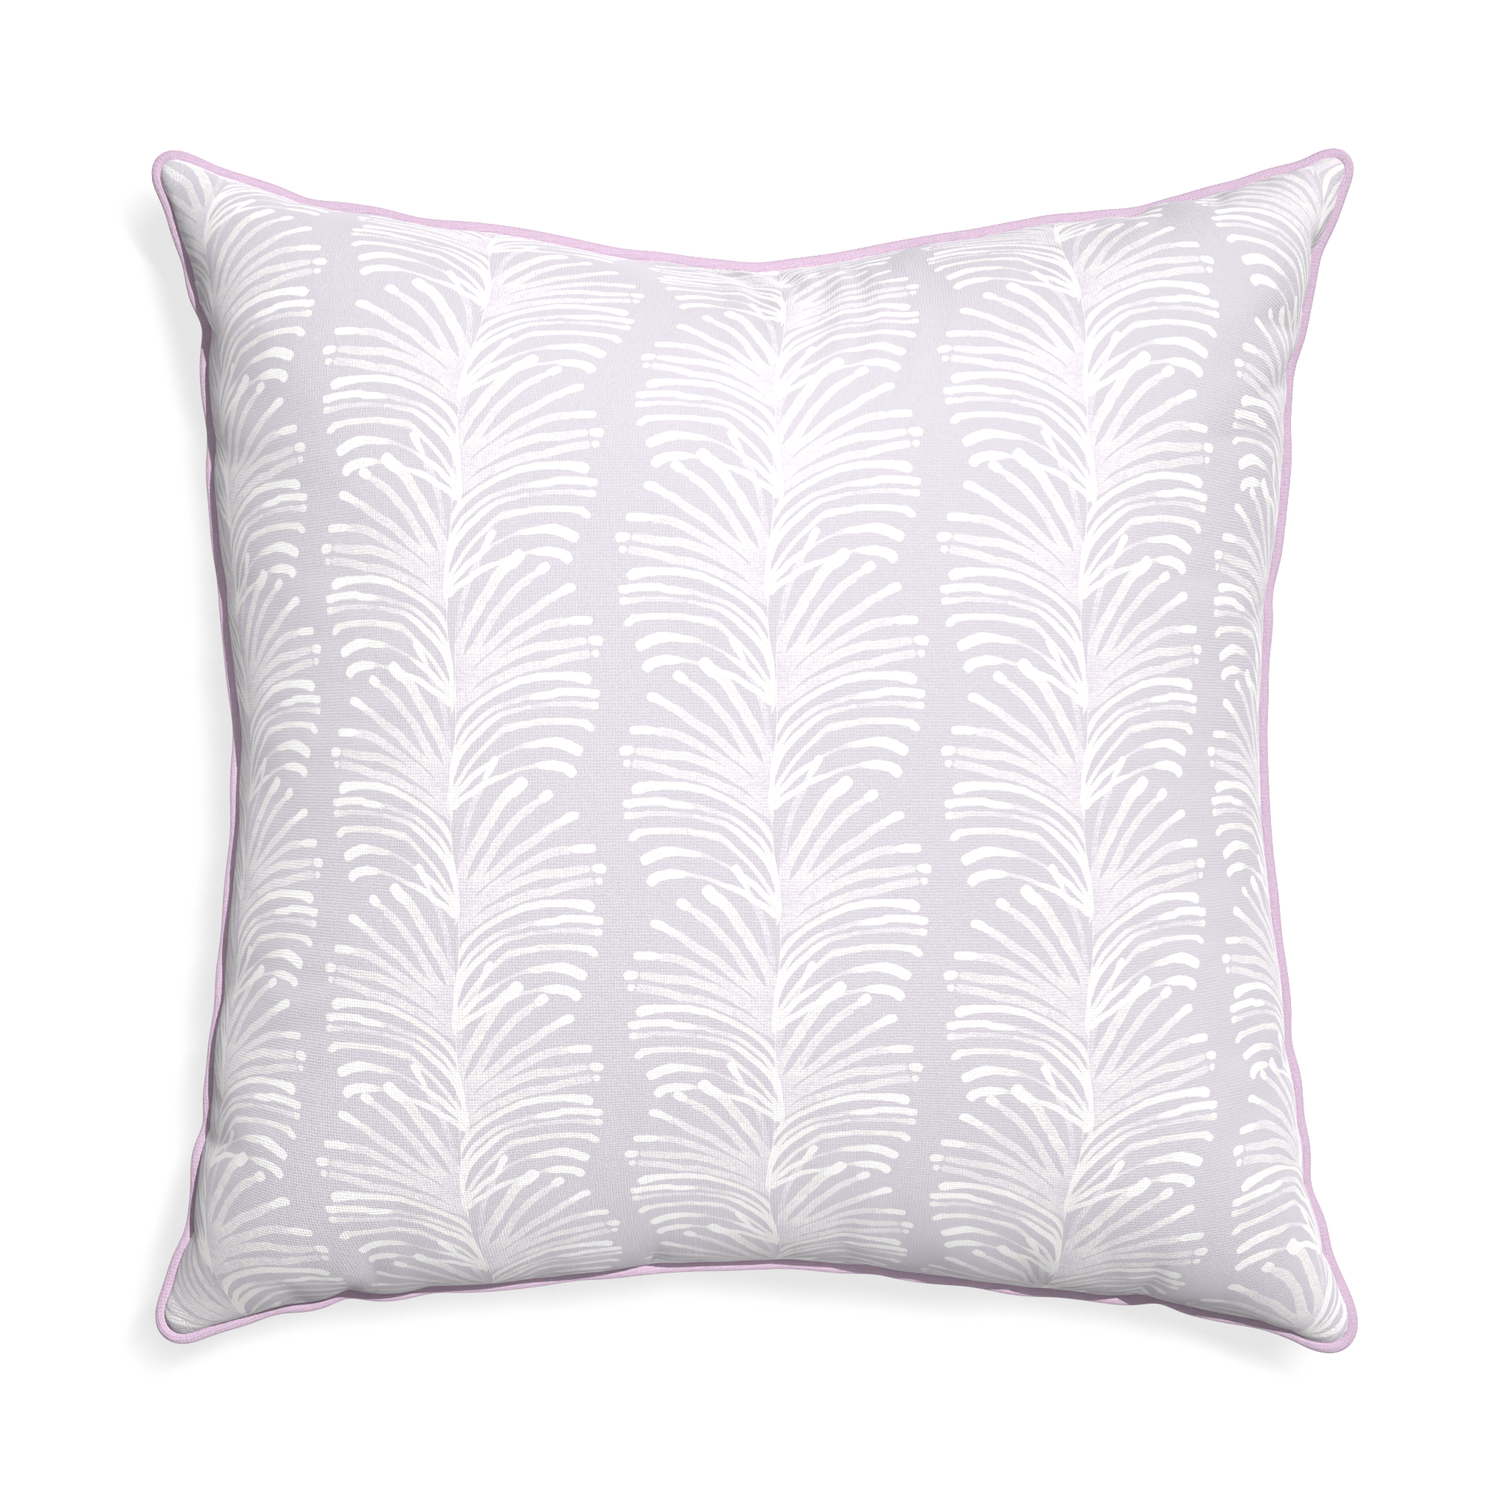 Euro-sham emma lavender custom lavender botanical stripepillow with l piping on white background